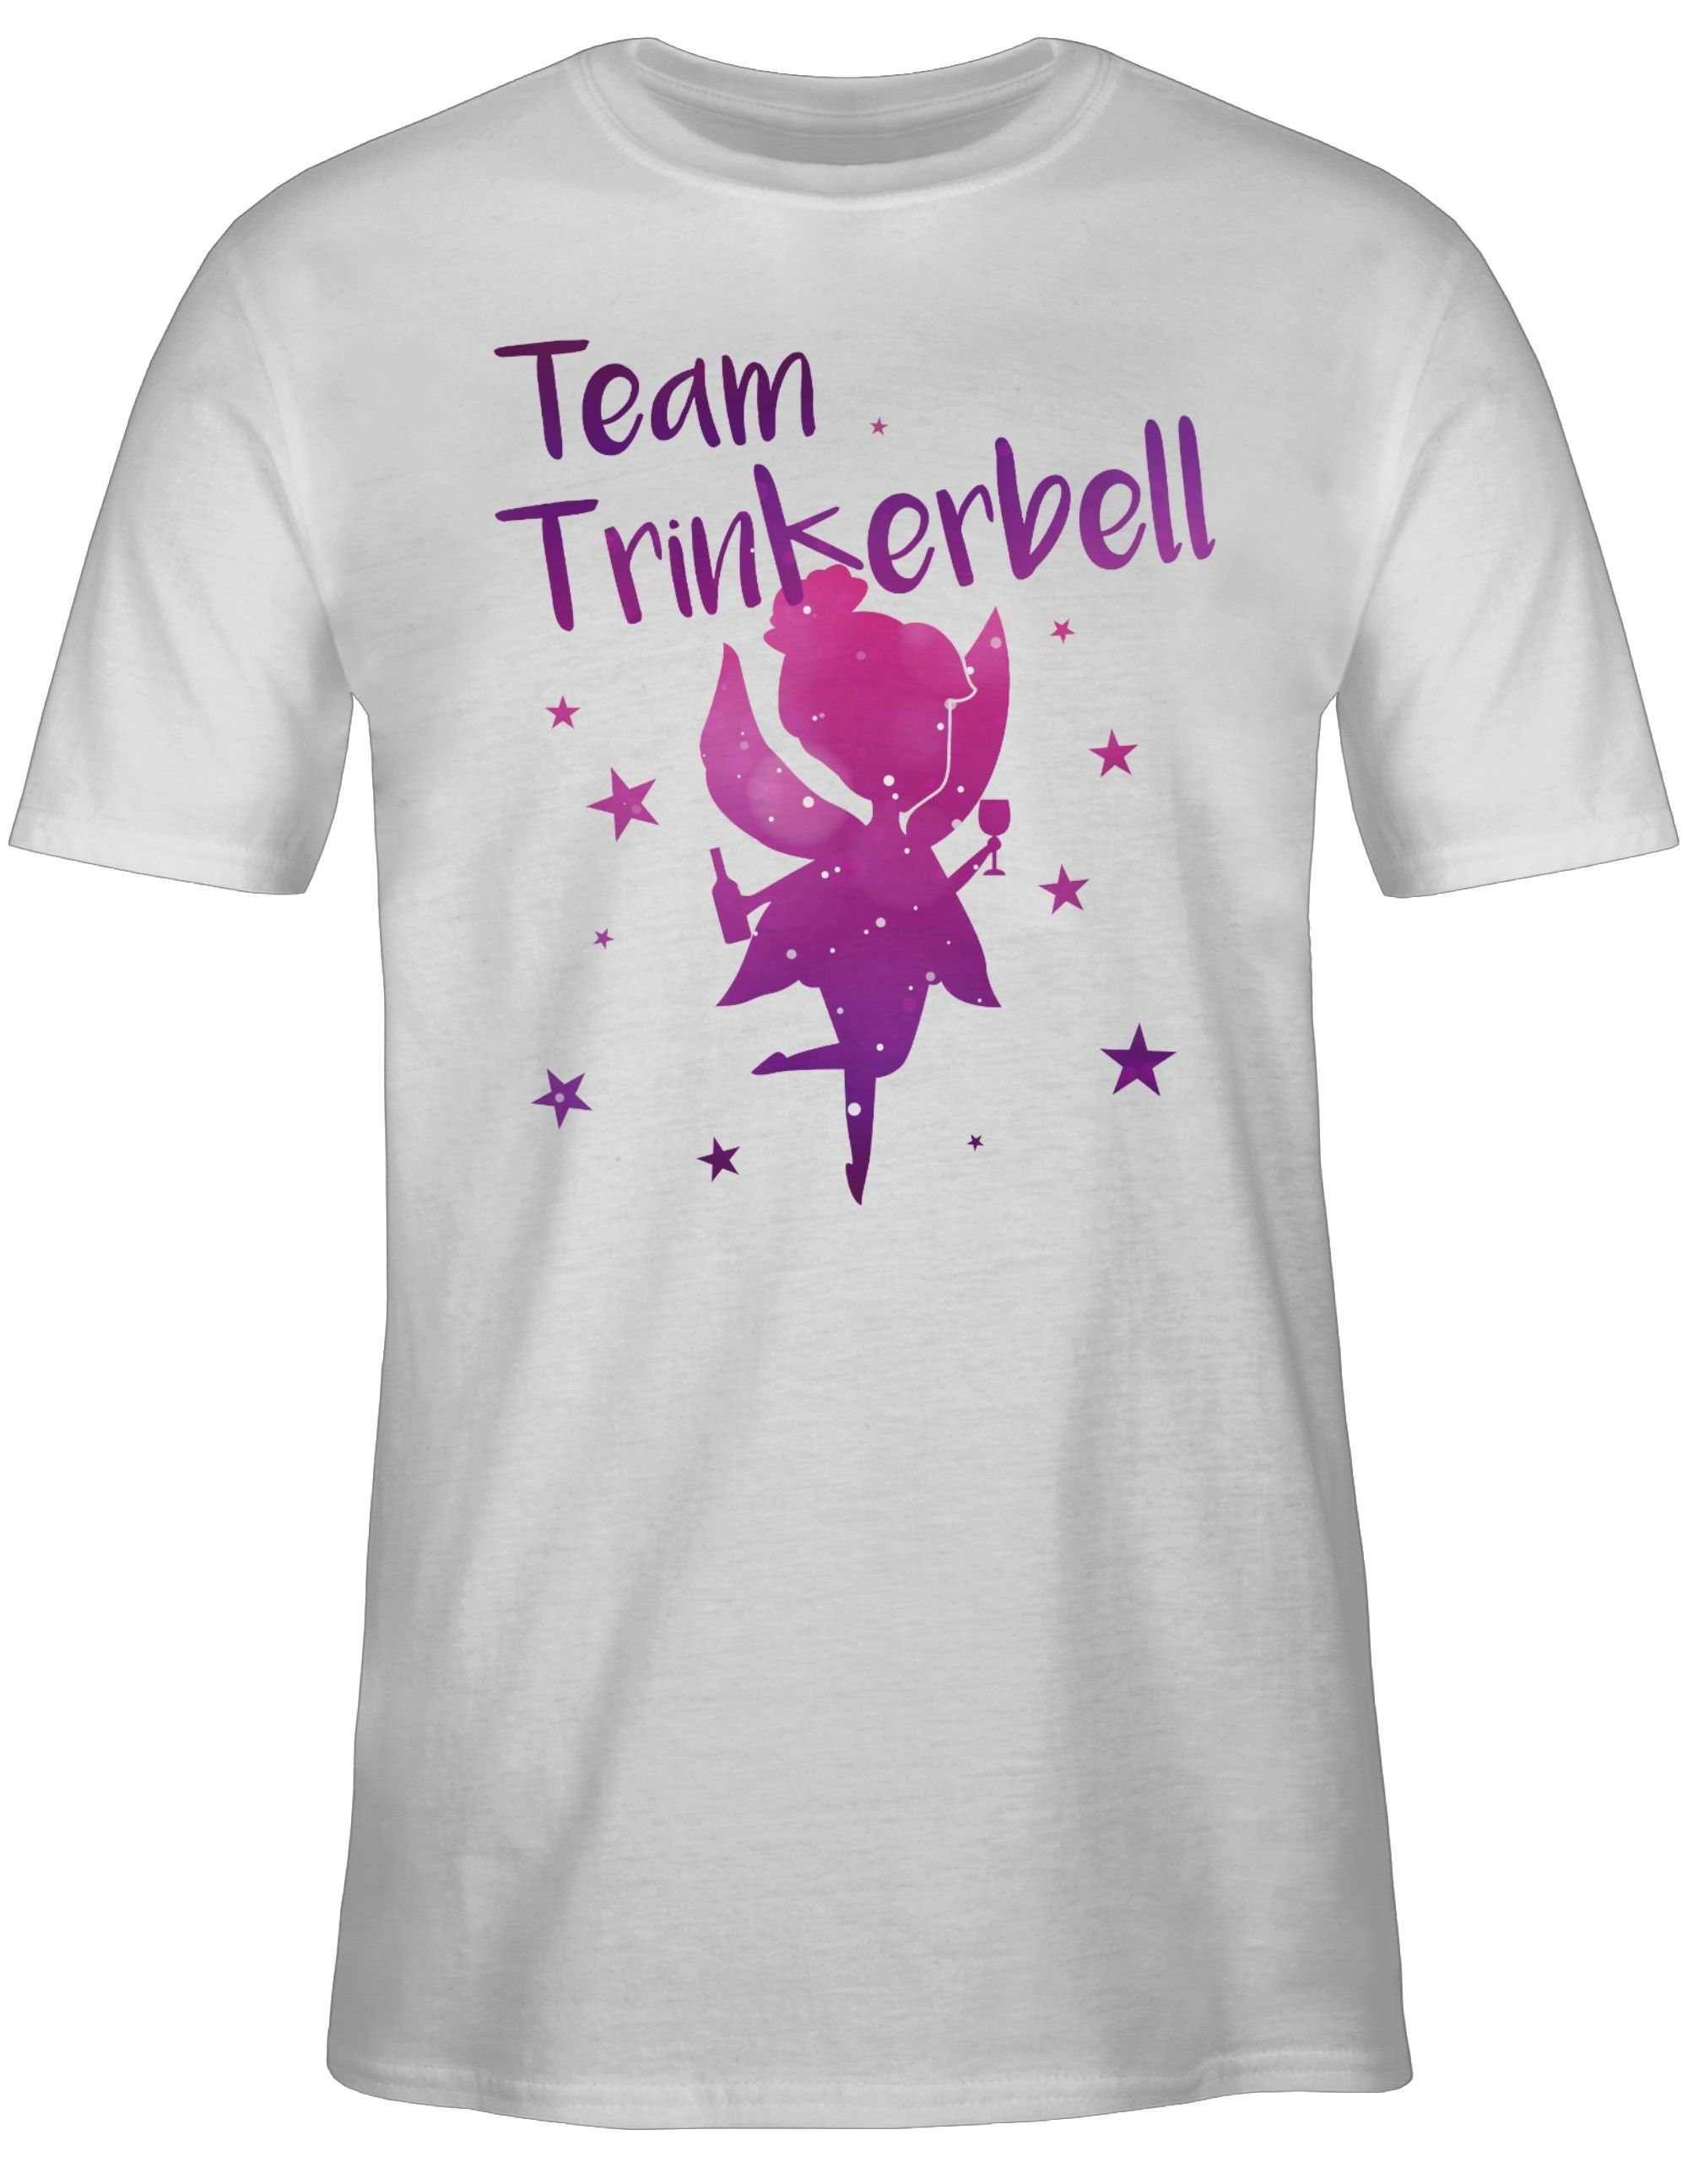 Shirtracer T-Shirt Team - Trinkerbell Karneval Outfit 3 Weiß